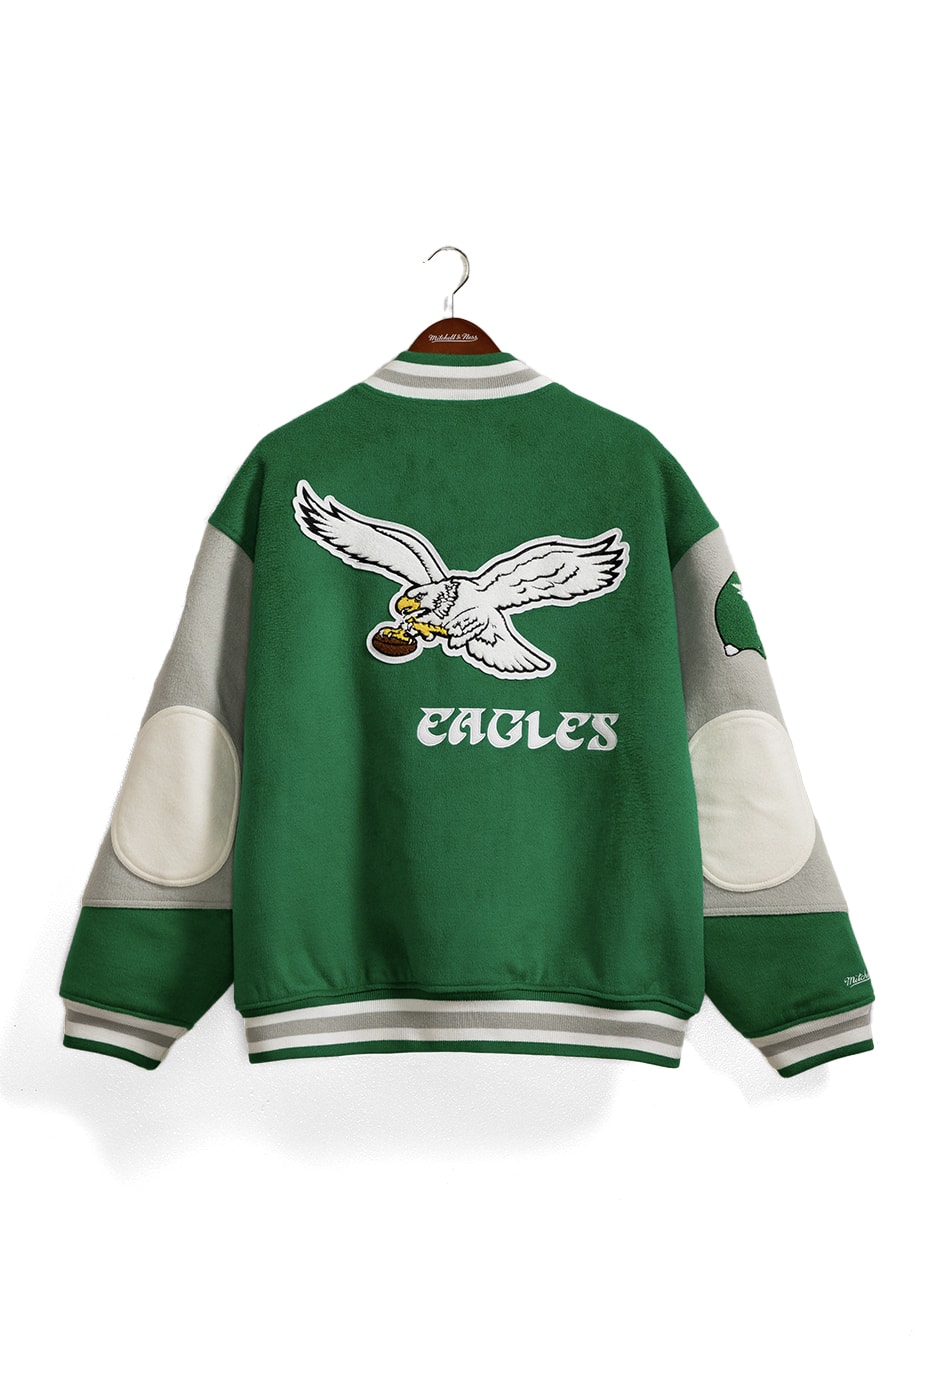 Mitchell & Ness Recreates Iconic 1990s Philadelphia Eagles Varsity Jacket Worn by Princess Diana letterman jacket limited edition